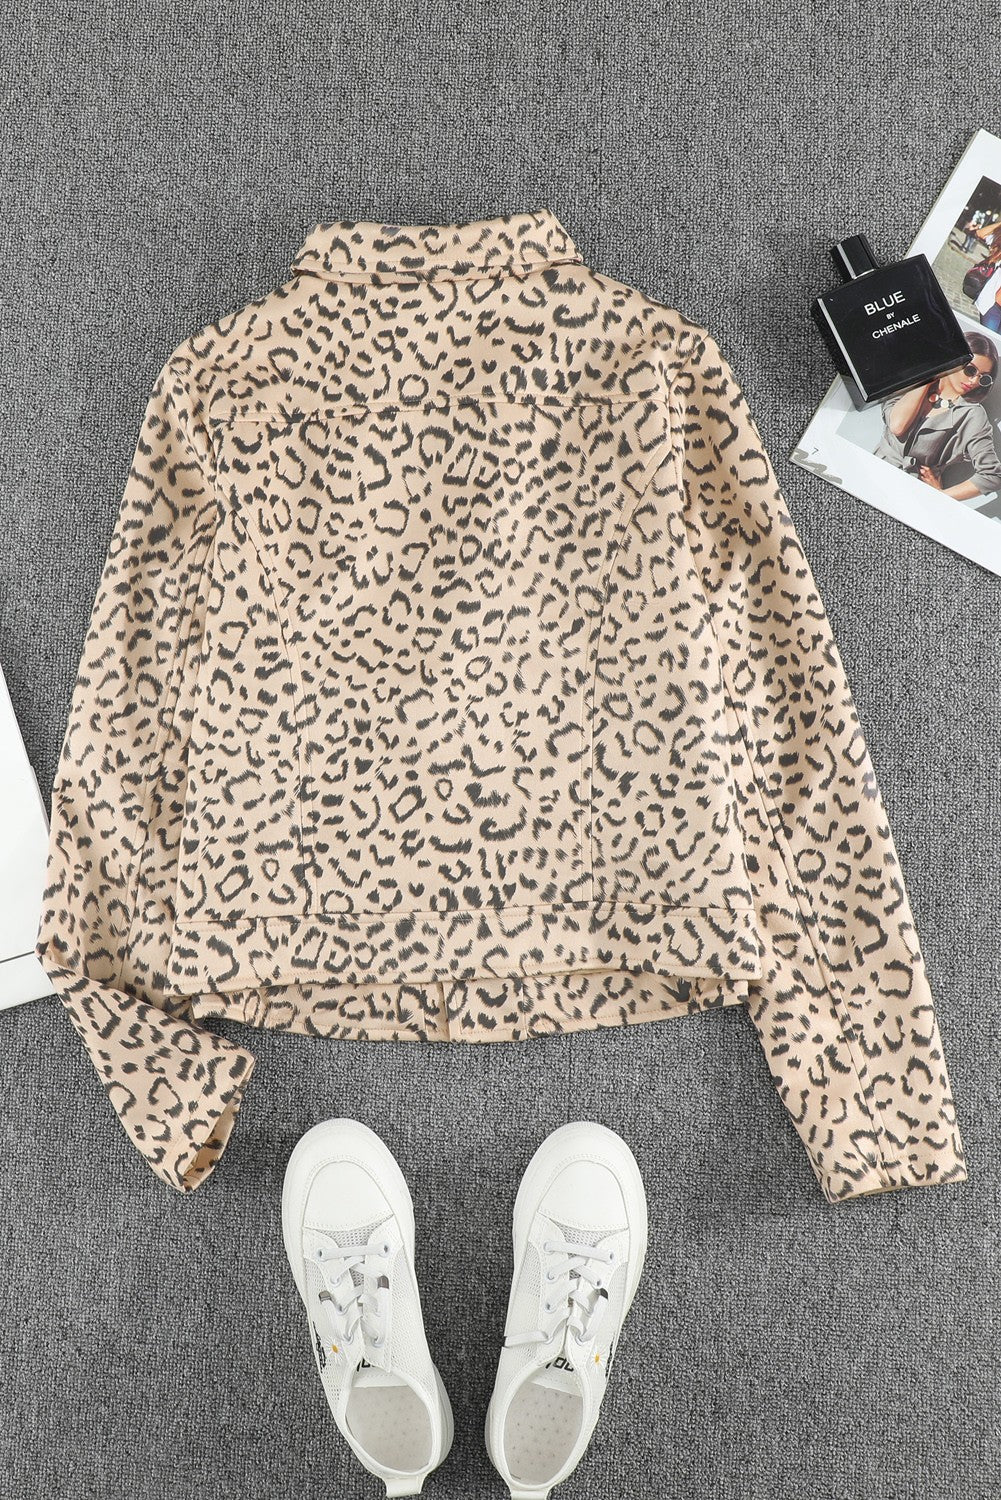 Leopard Print Zipper Lapel Collar Jacket